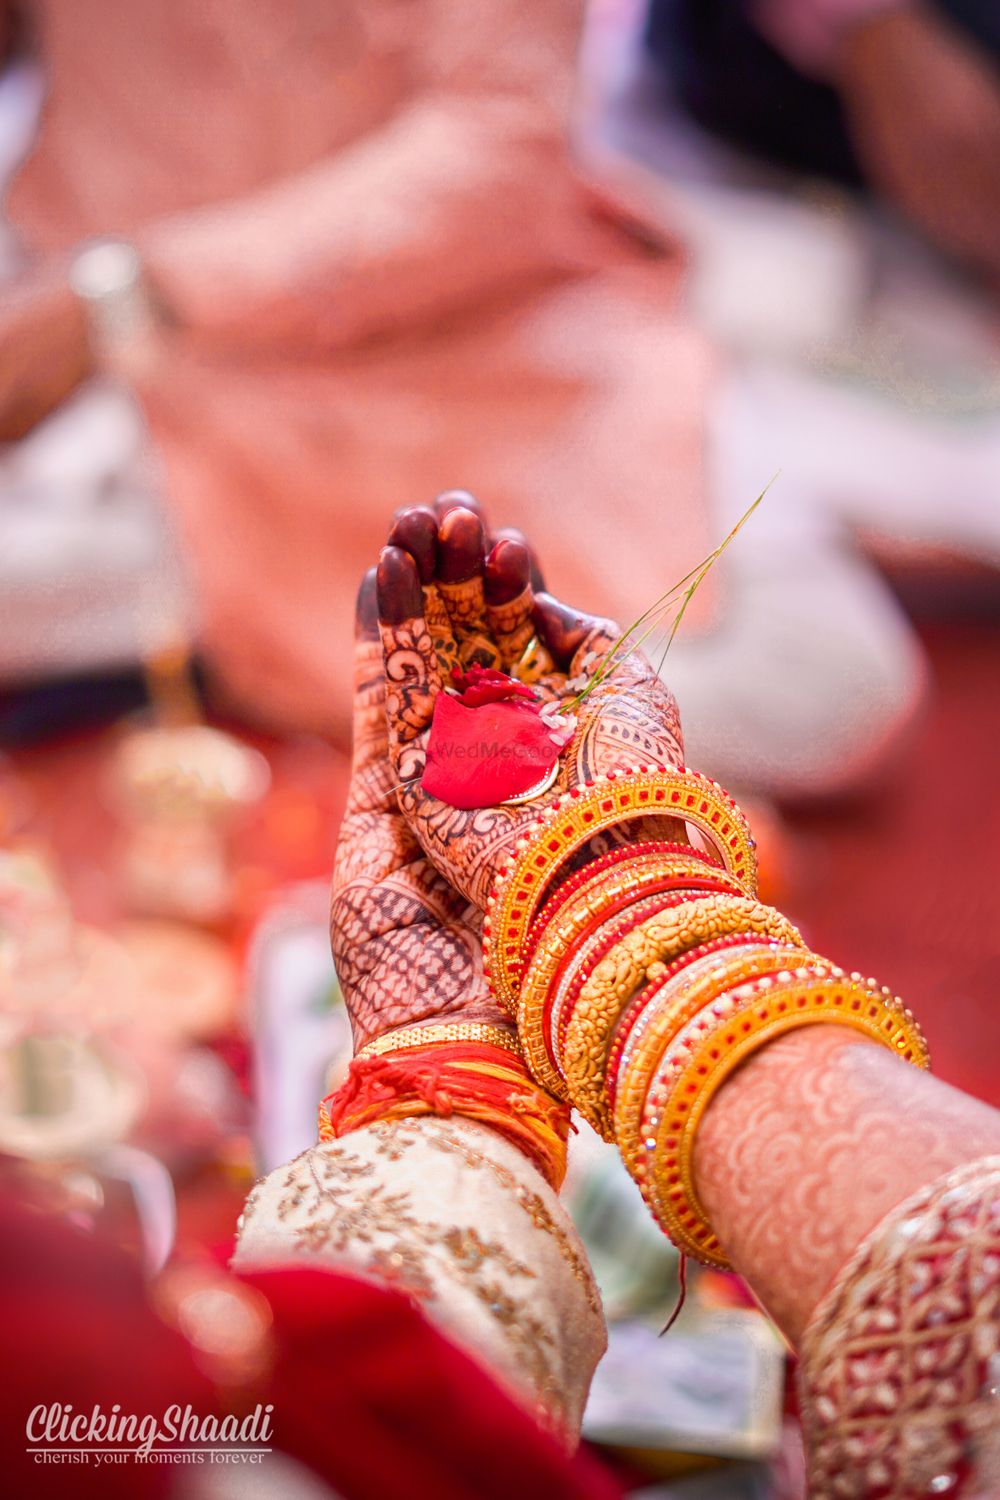 Photo From Amit weds Sneha - A Big Fat Indian Marwari Wedding - By Clicking Shaadi